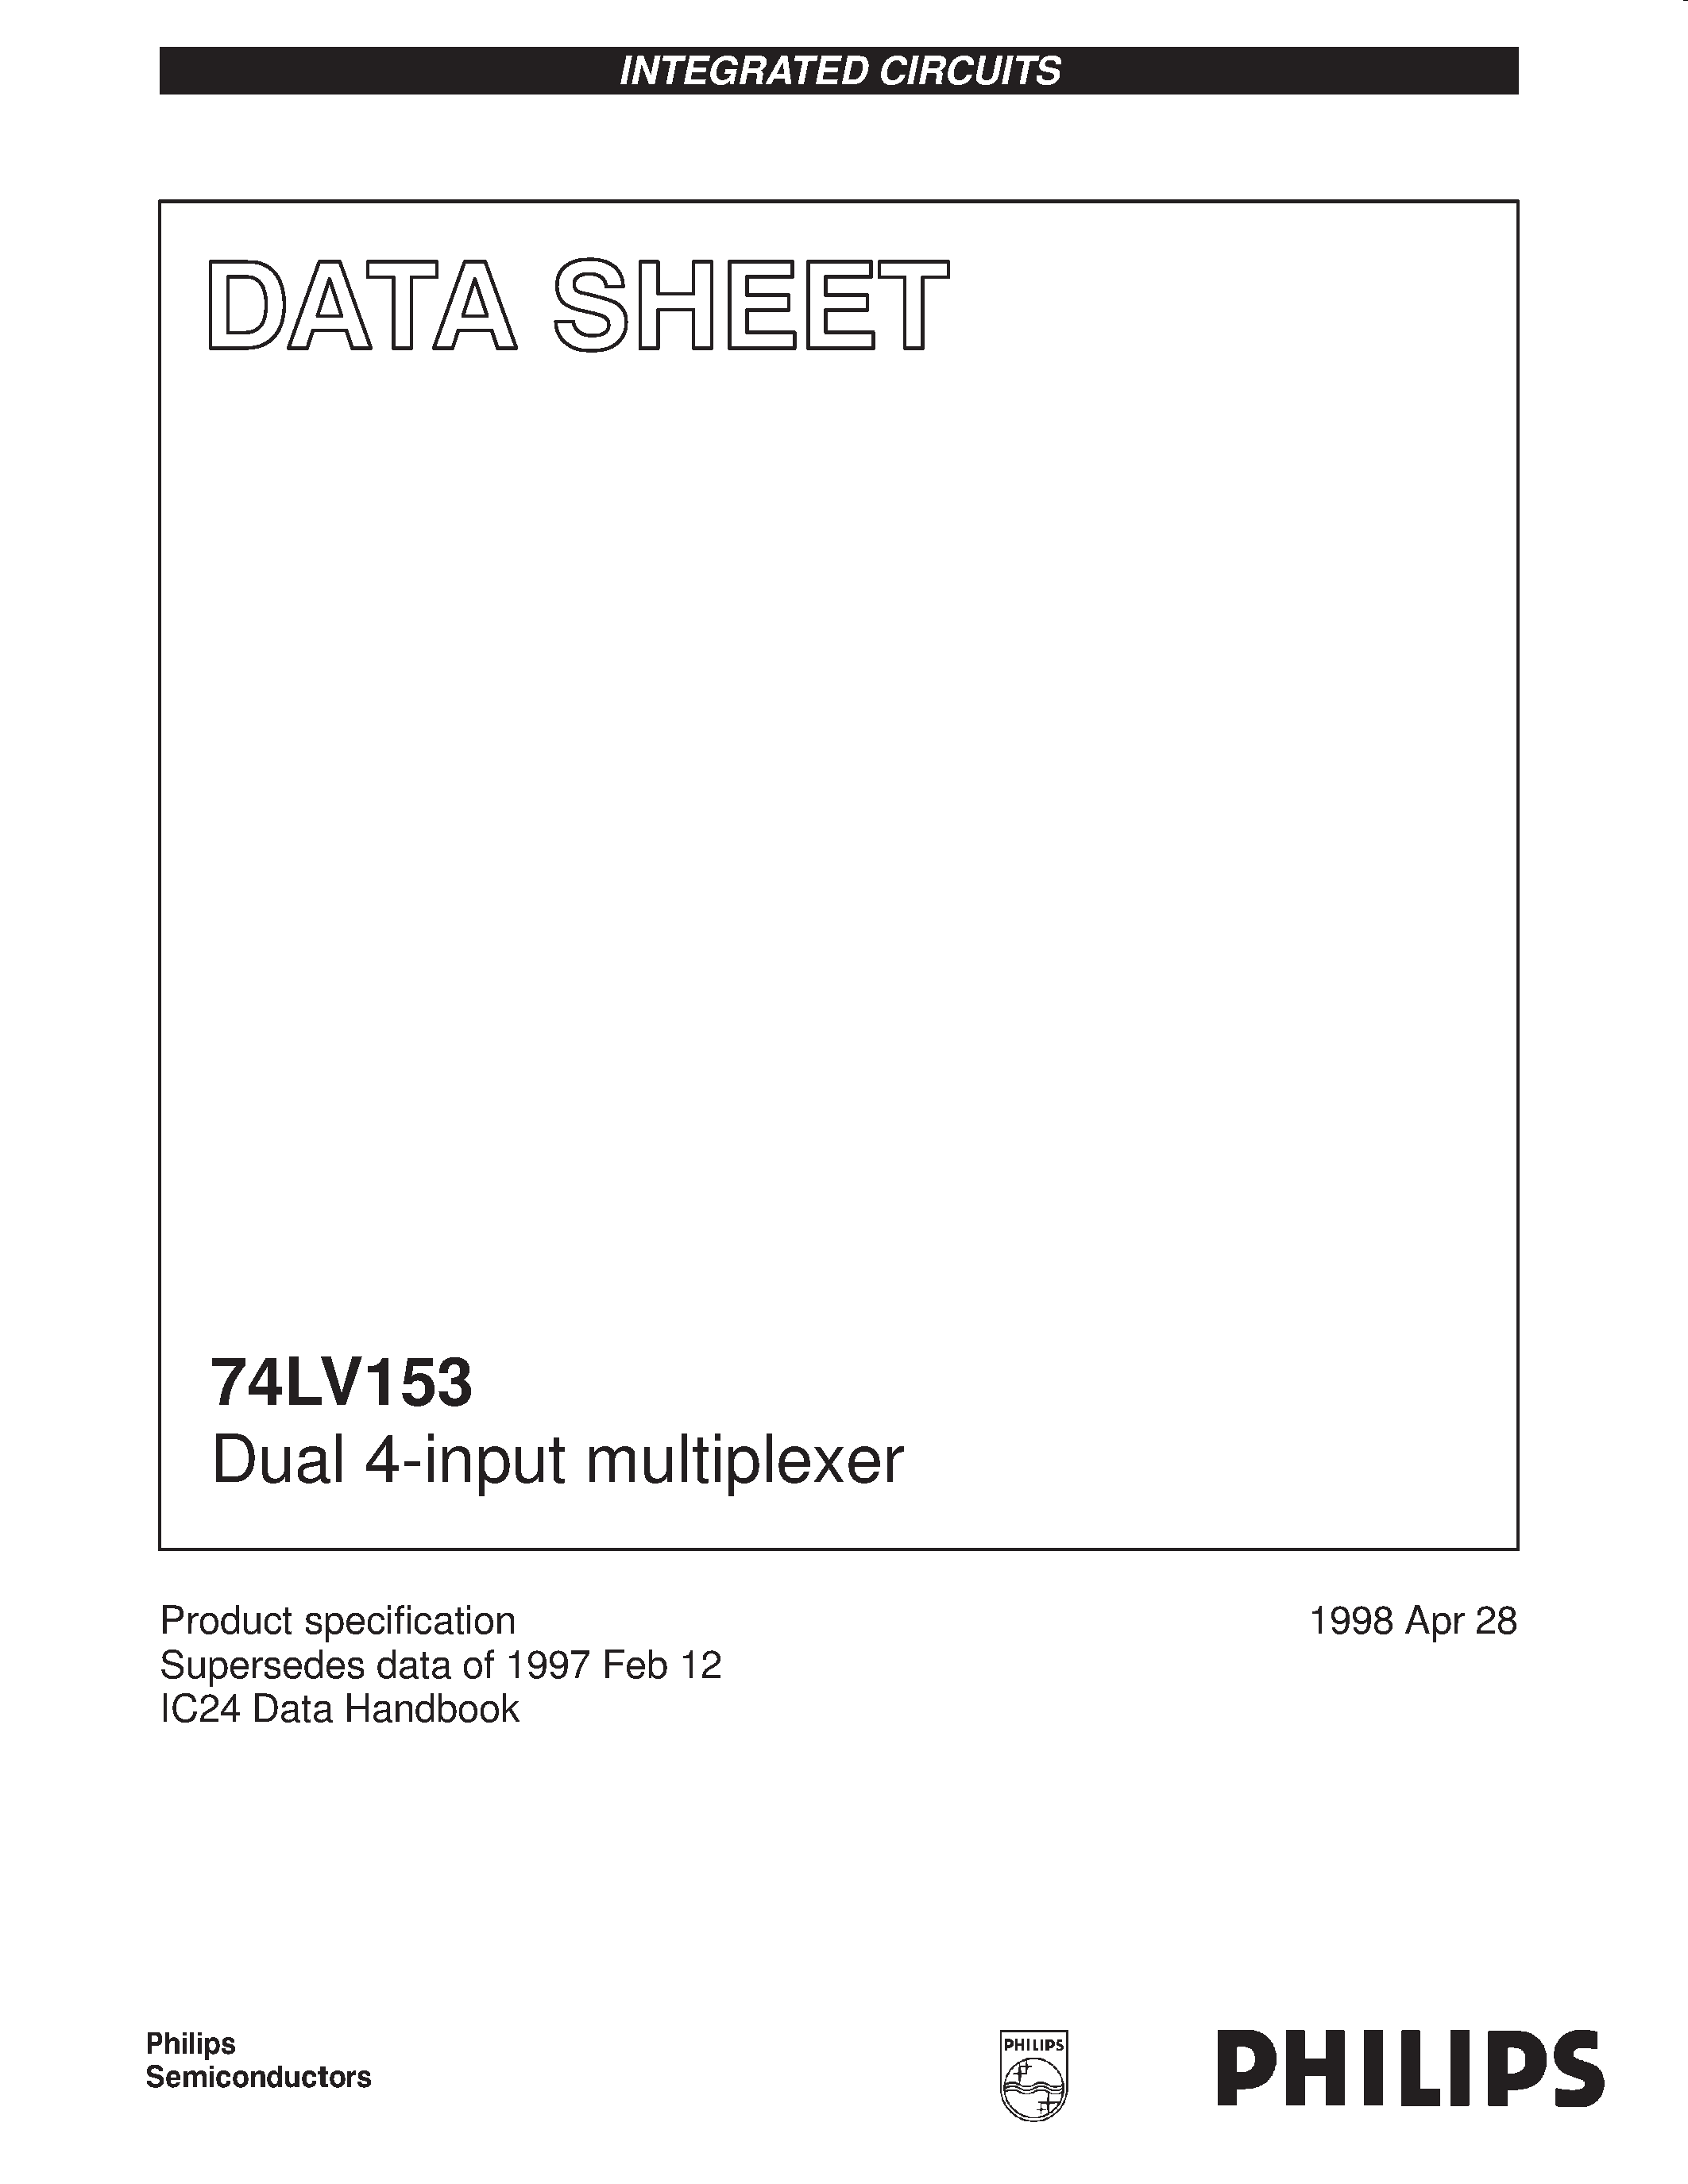 Datasheet 74LV153 - Dual 4-input multiplexer page 1